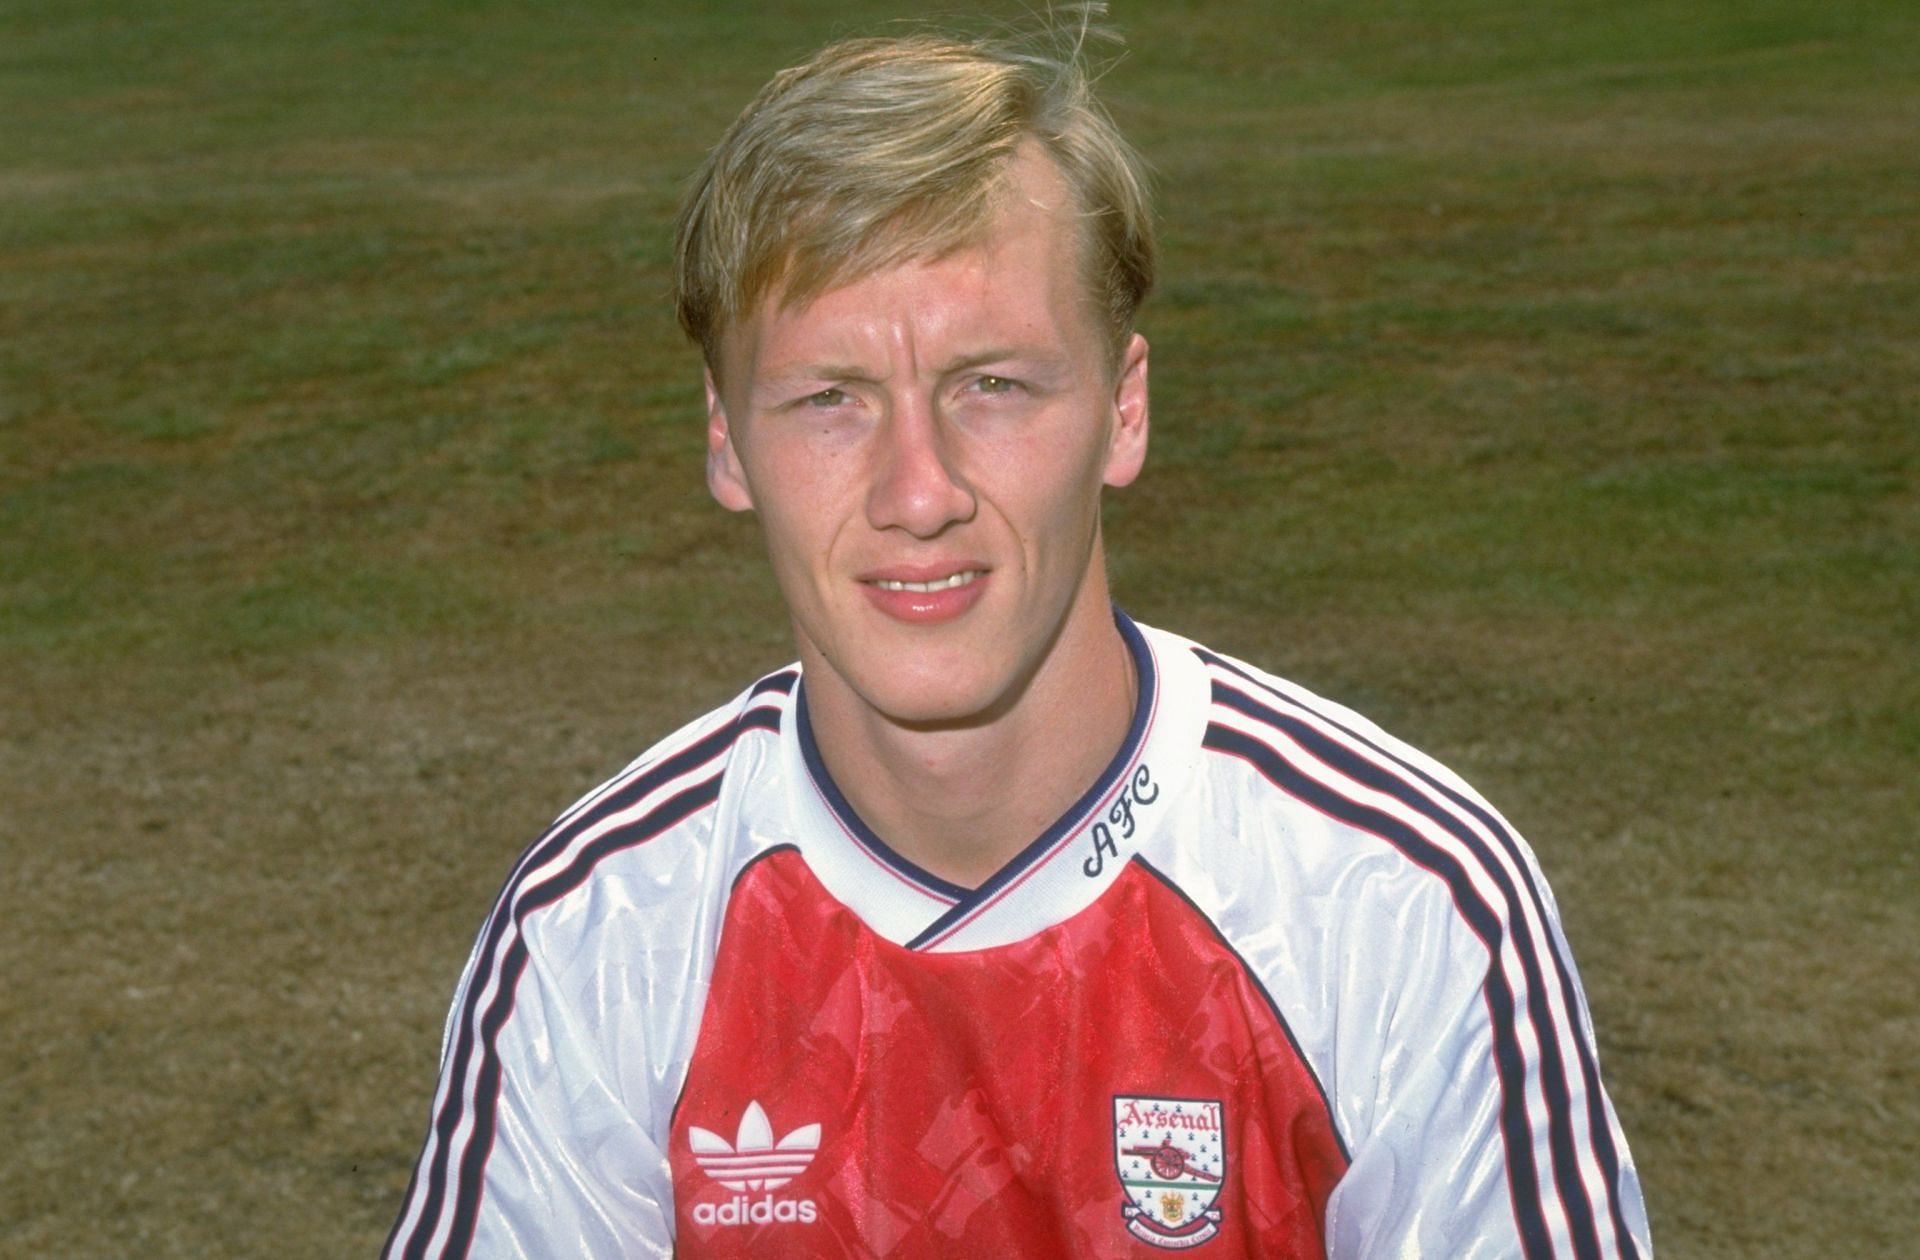 Lee Dixon of Arsenal